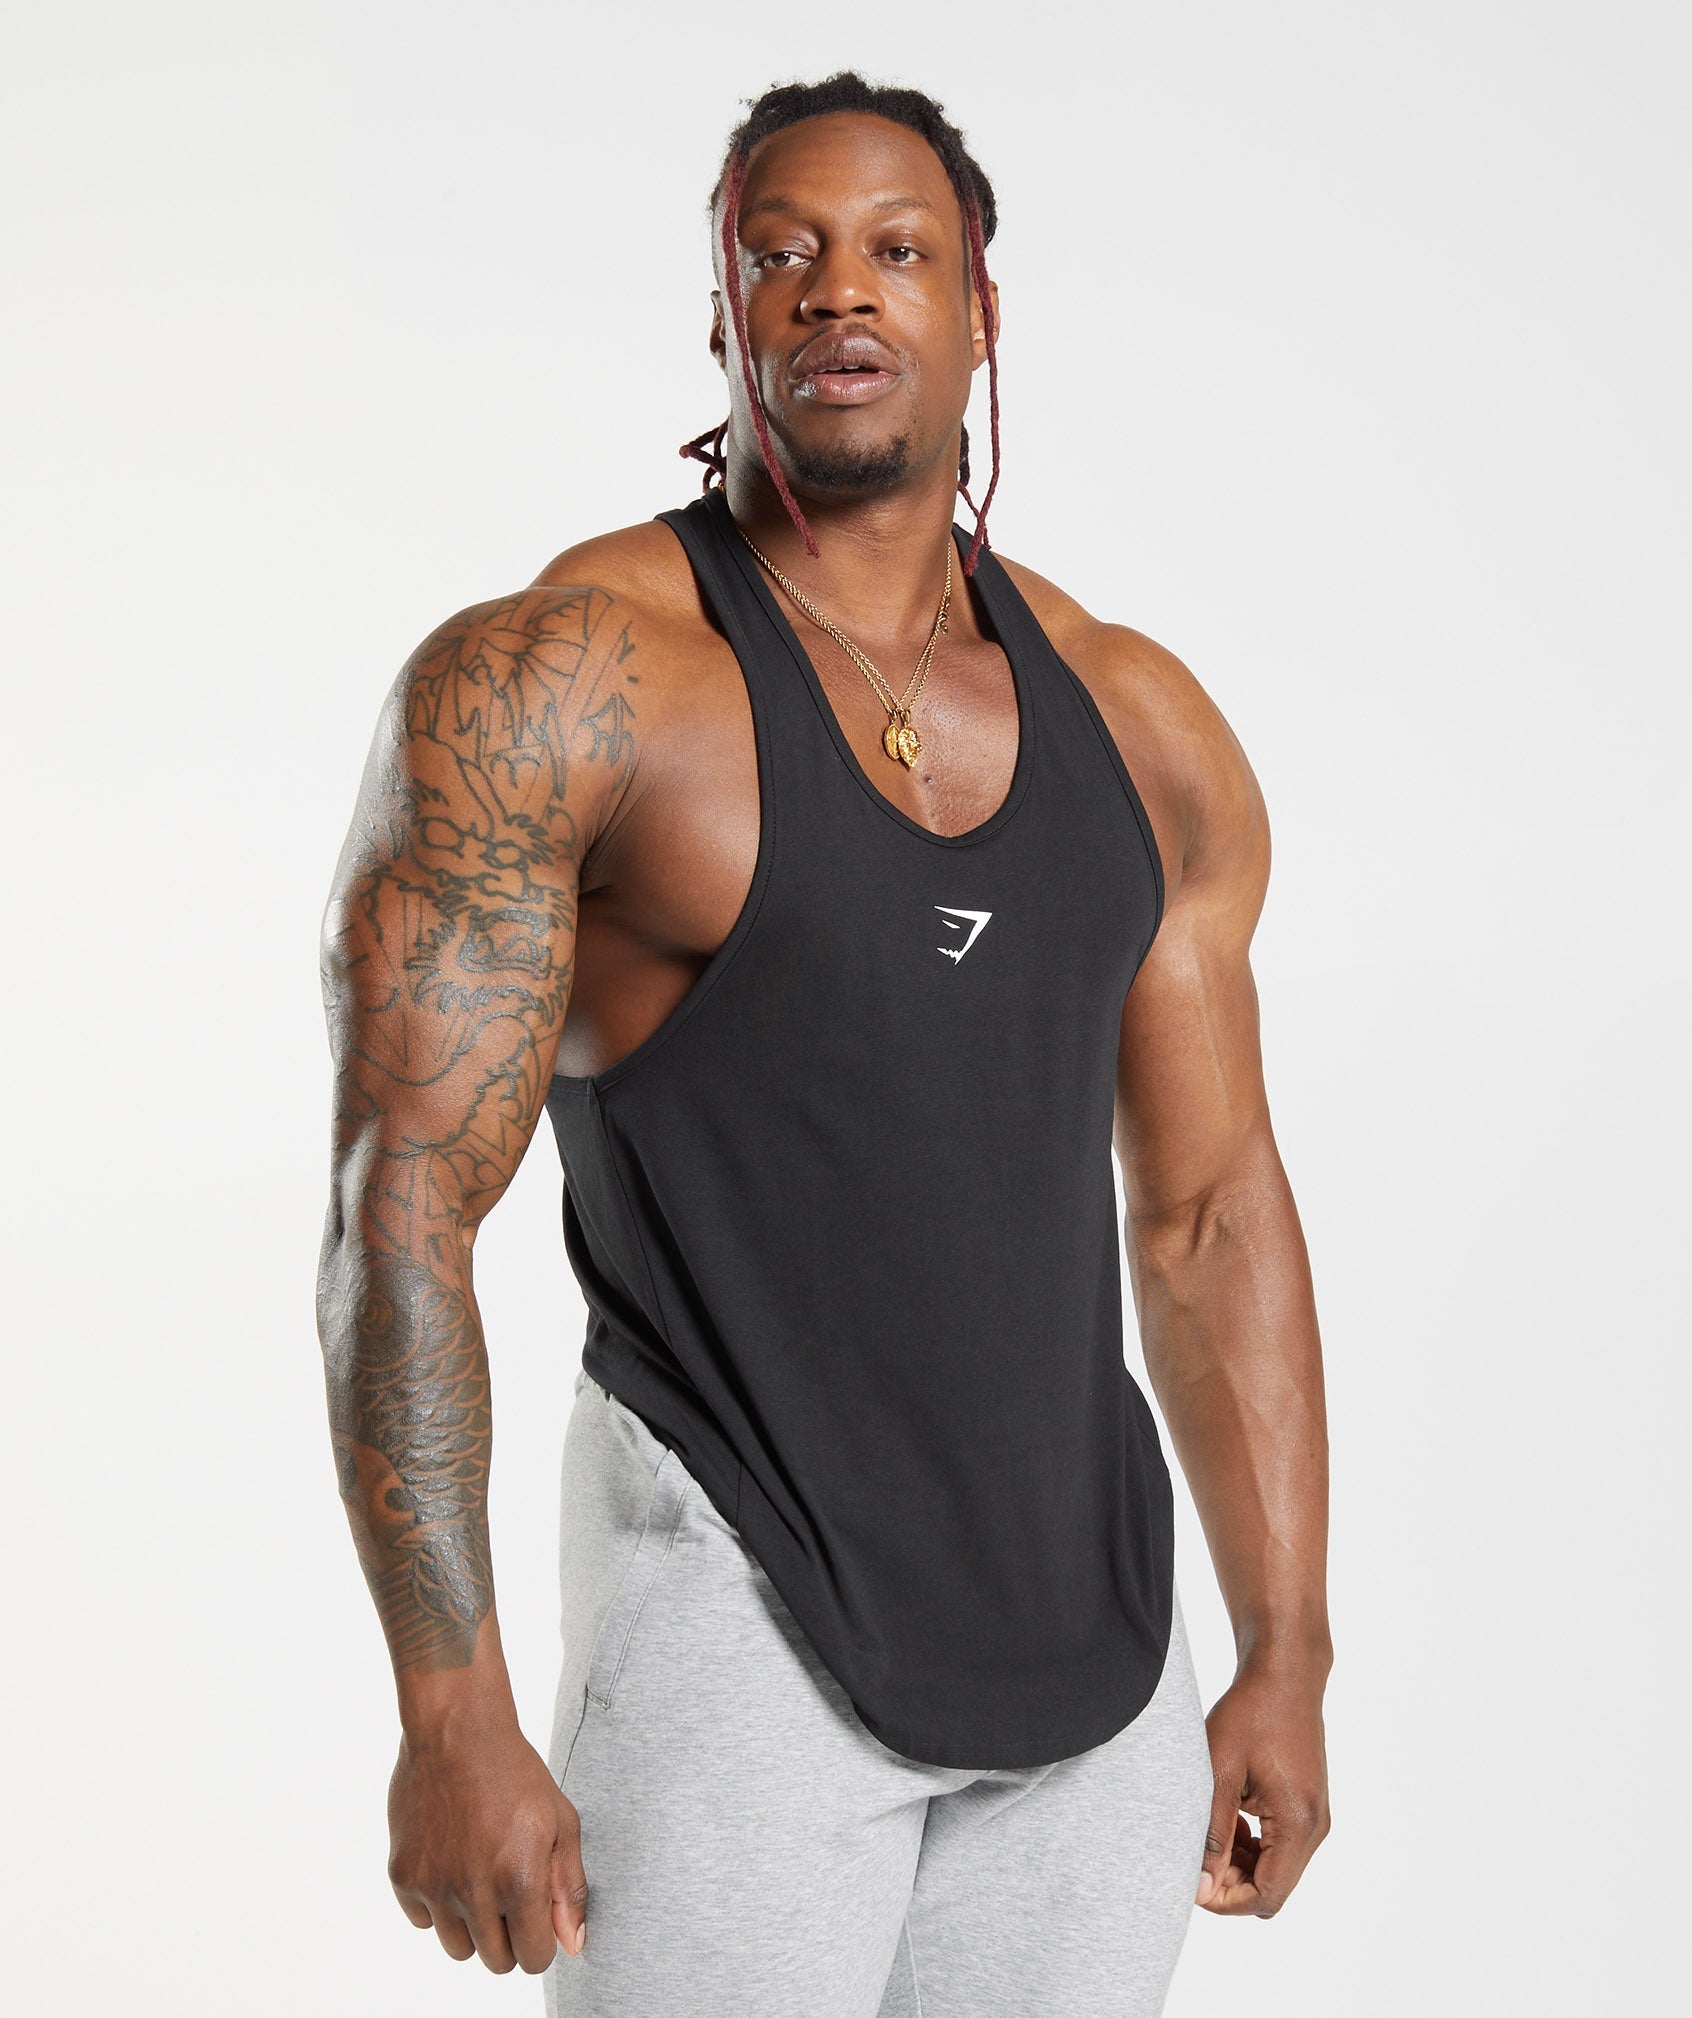 Pedort Workout Tank Tops For Men Loose Fit Men's Muscle Cut Off Gym Workout  Stringer Tank Tops Bodybuilding Fitness T-Shirts Black,XL 